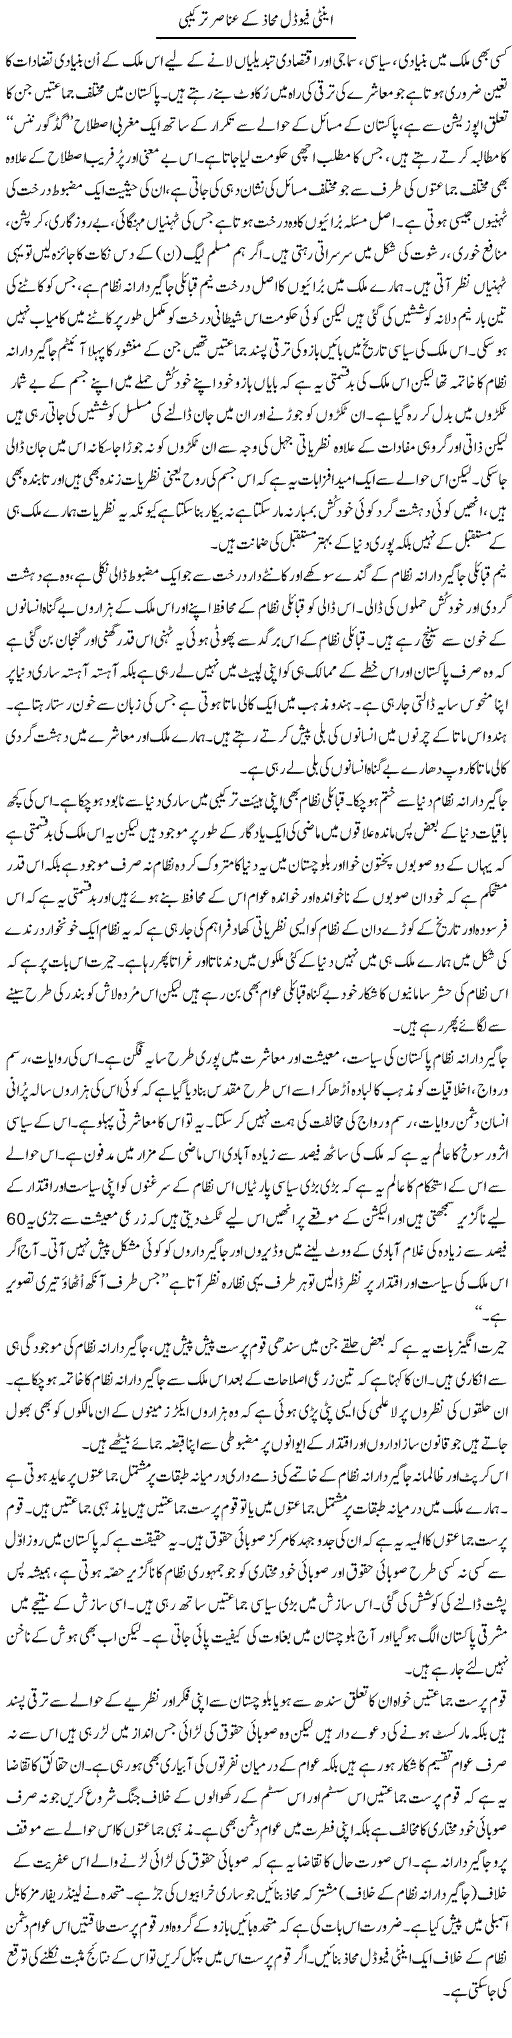 Feudal System in Pakistan Express Column Zaheer Akhtar 7 February 2011